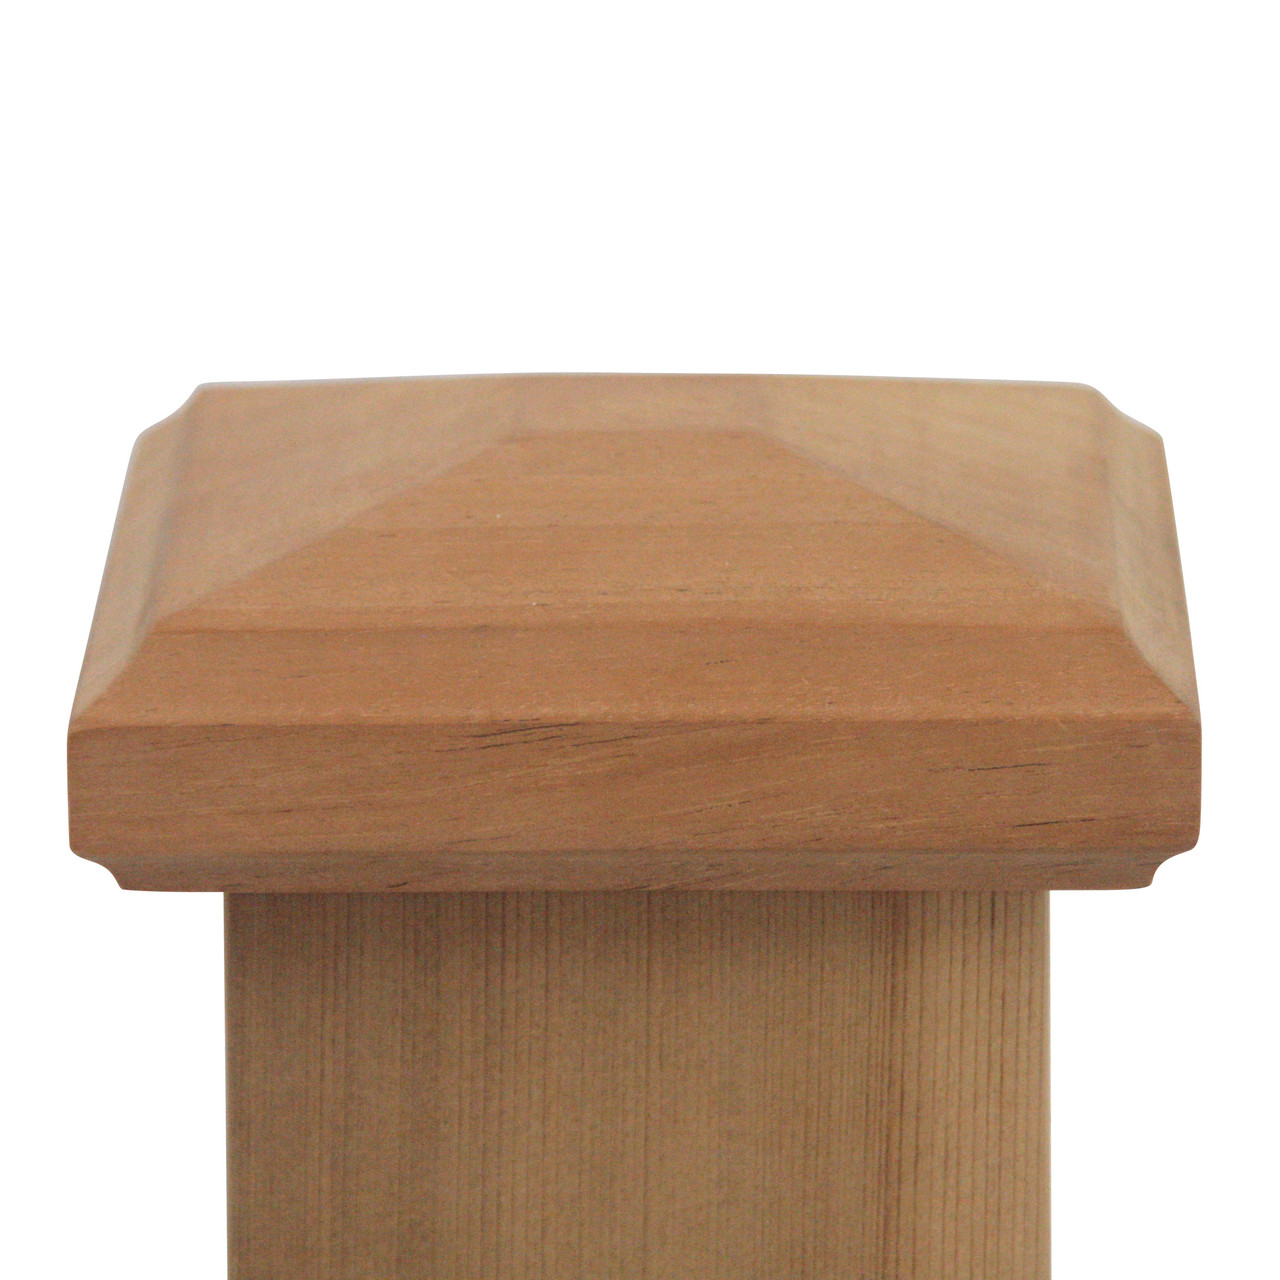 4x4 Traditional Pyramid Miterless Wood Post Cap™